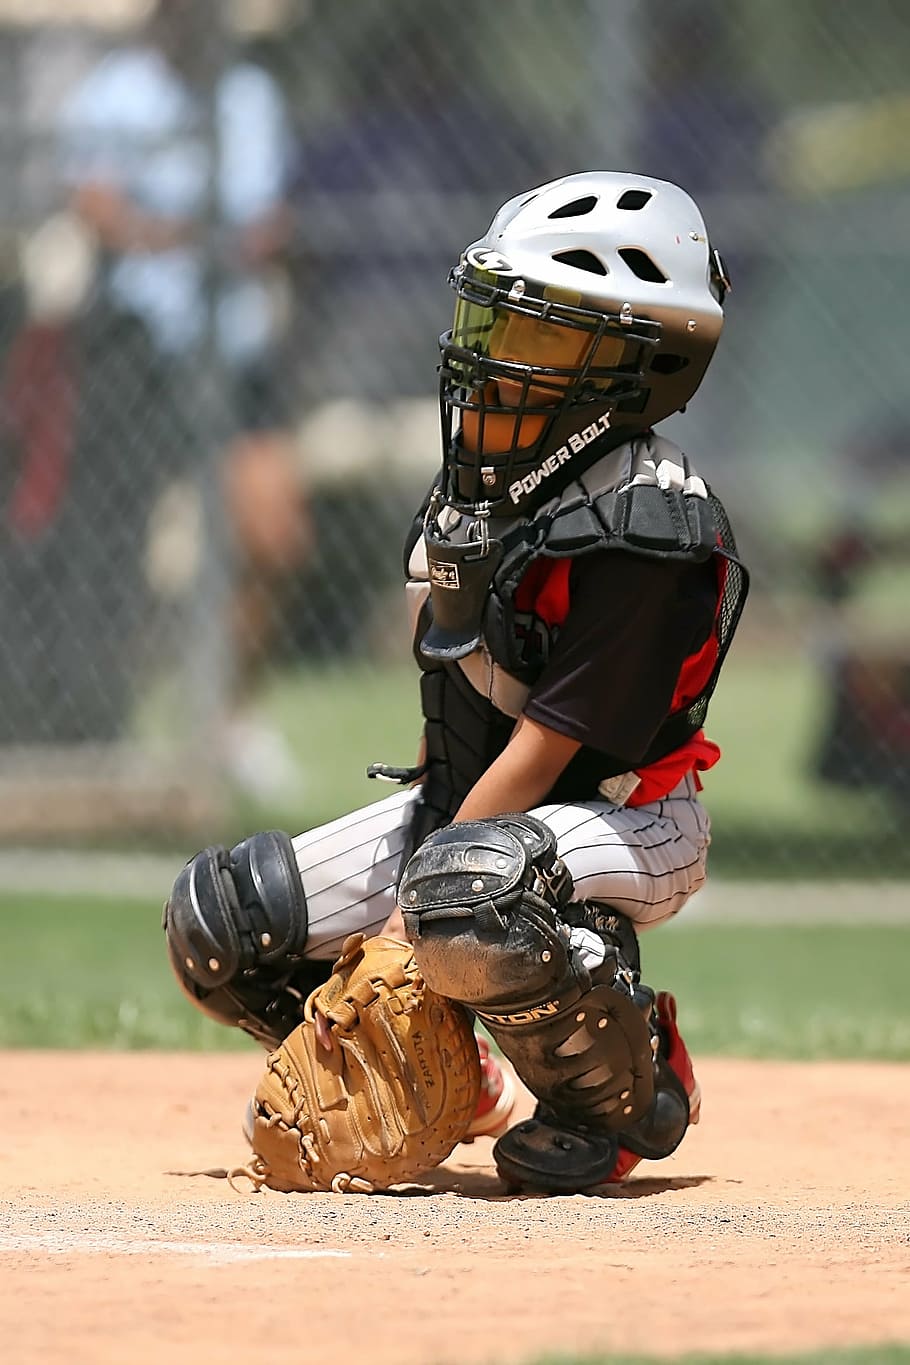 948 Baseball Catcher Drawing Images Stock Photos  Vectors  Shutterstock